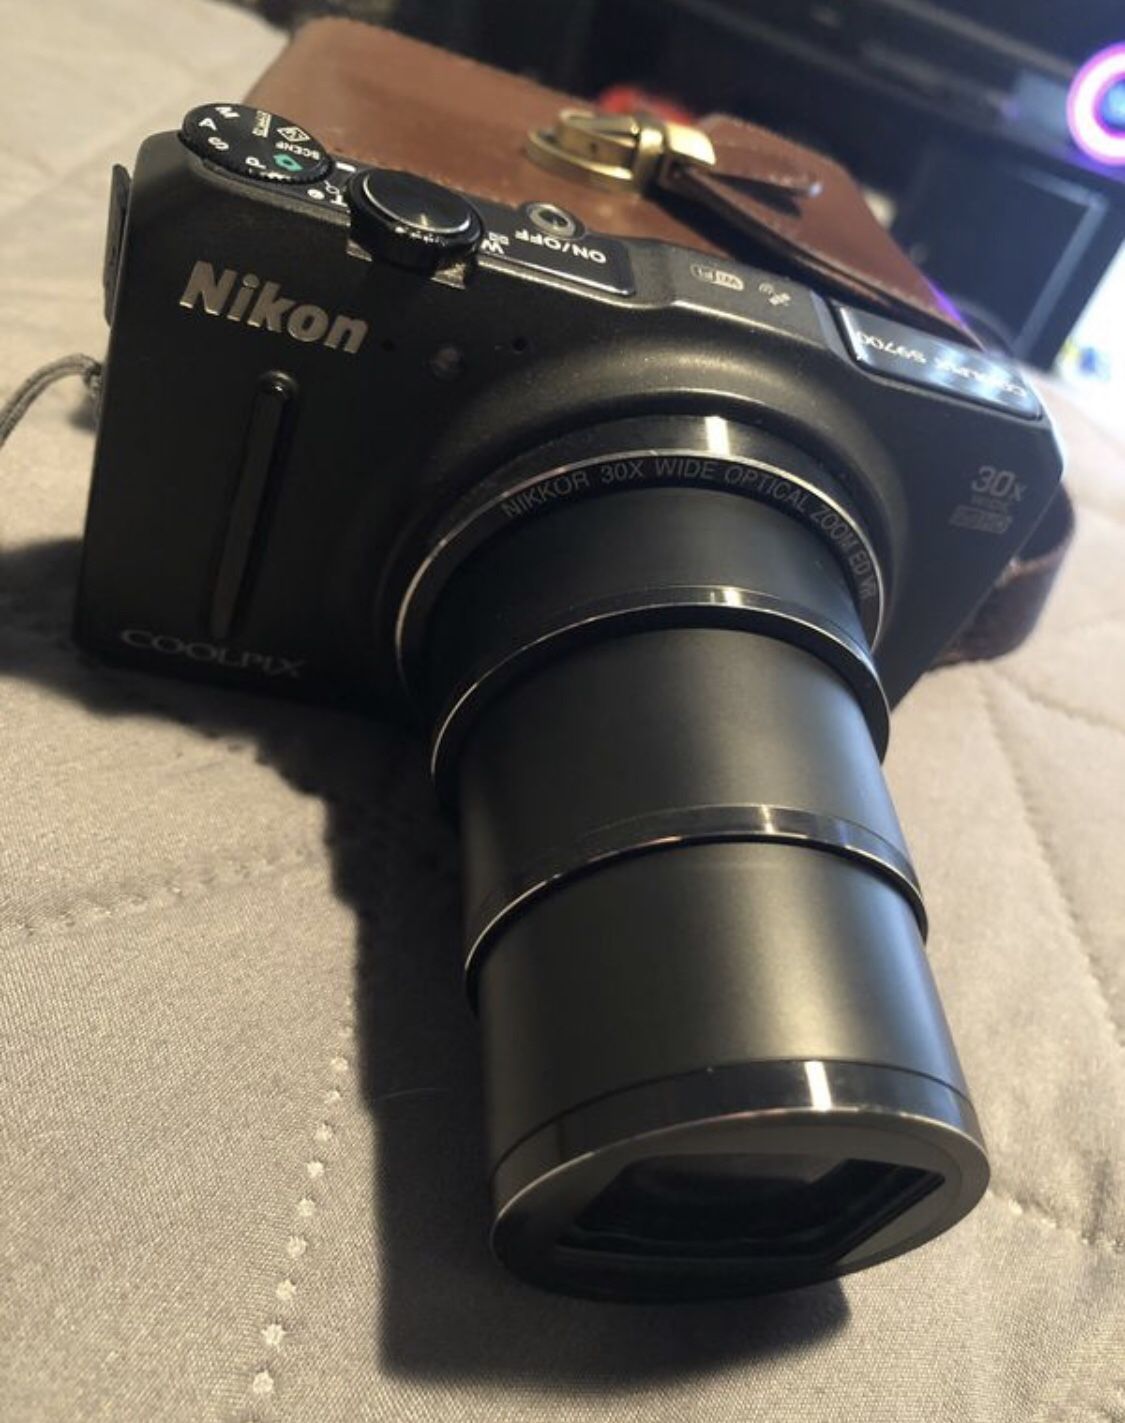 Digital camera Nikon built in WiFi 30x zoom